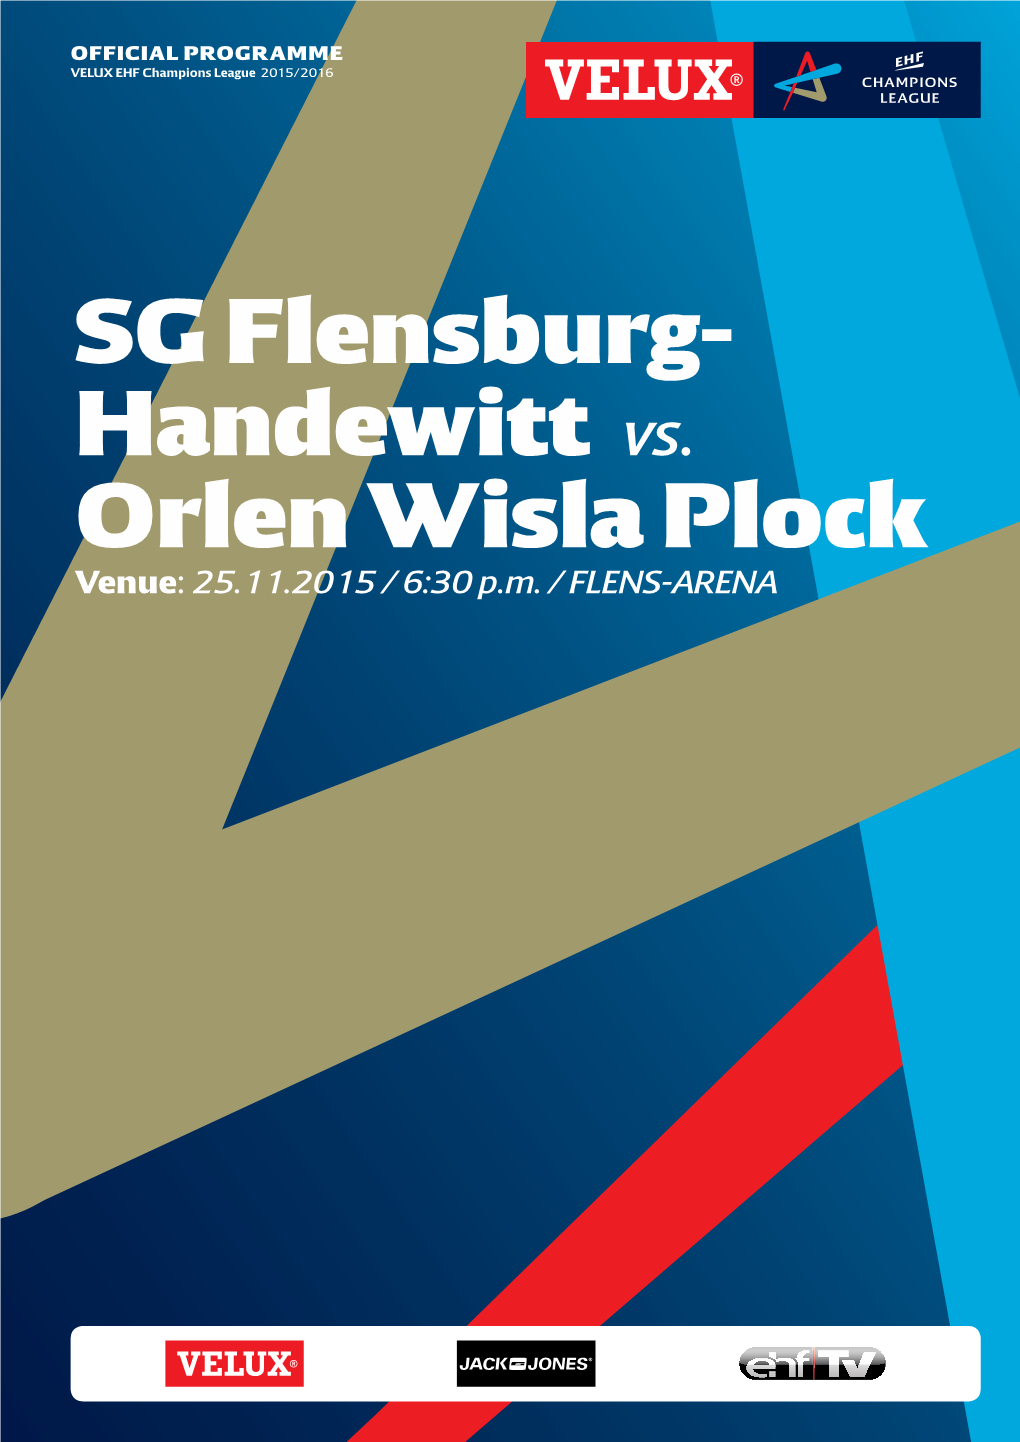 SG Flensburg- Handewitt Vs. Orlen Wisla Plock Venue: 25.11.2015 / 6:30 P.M